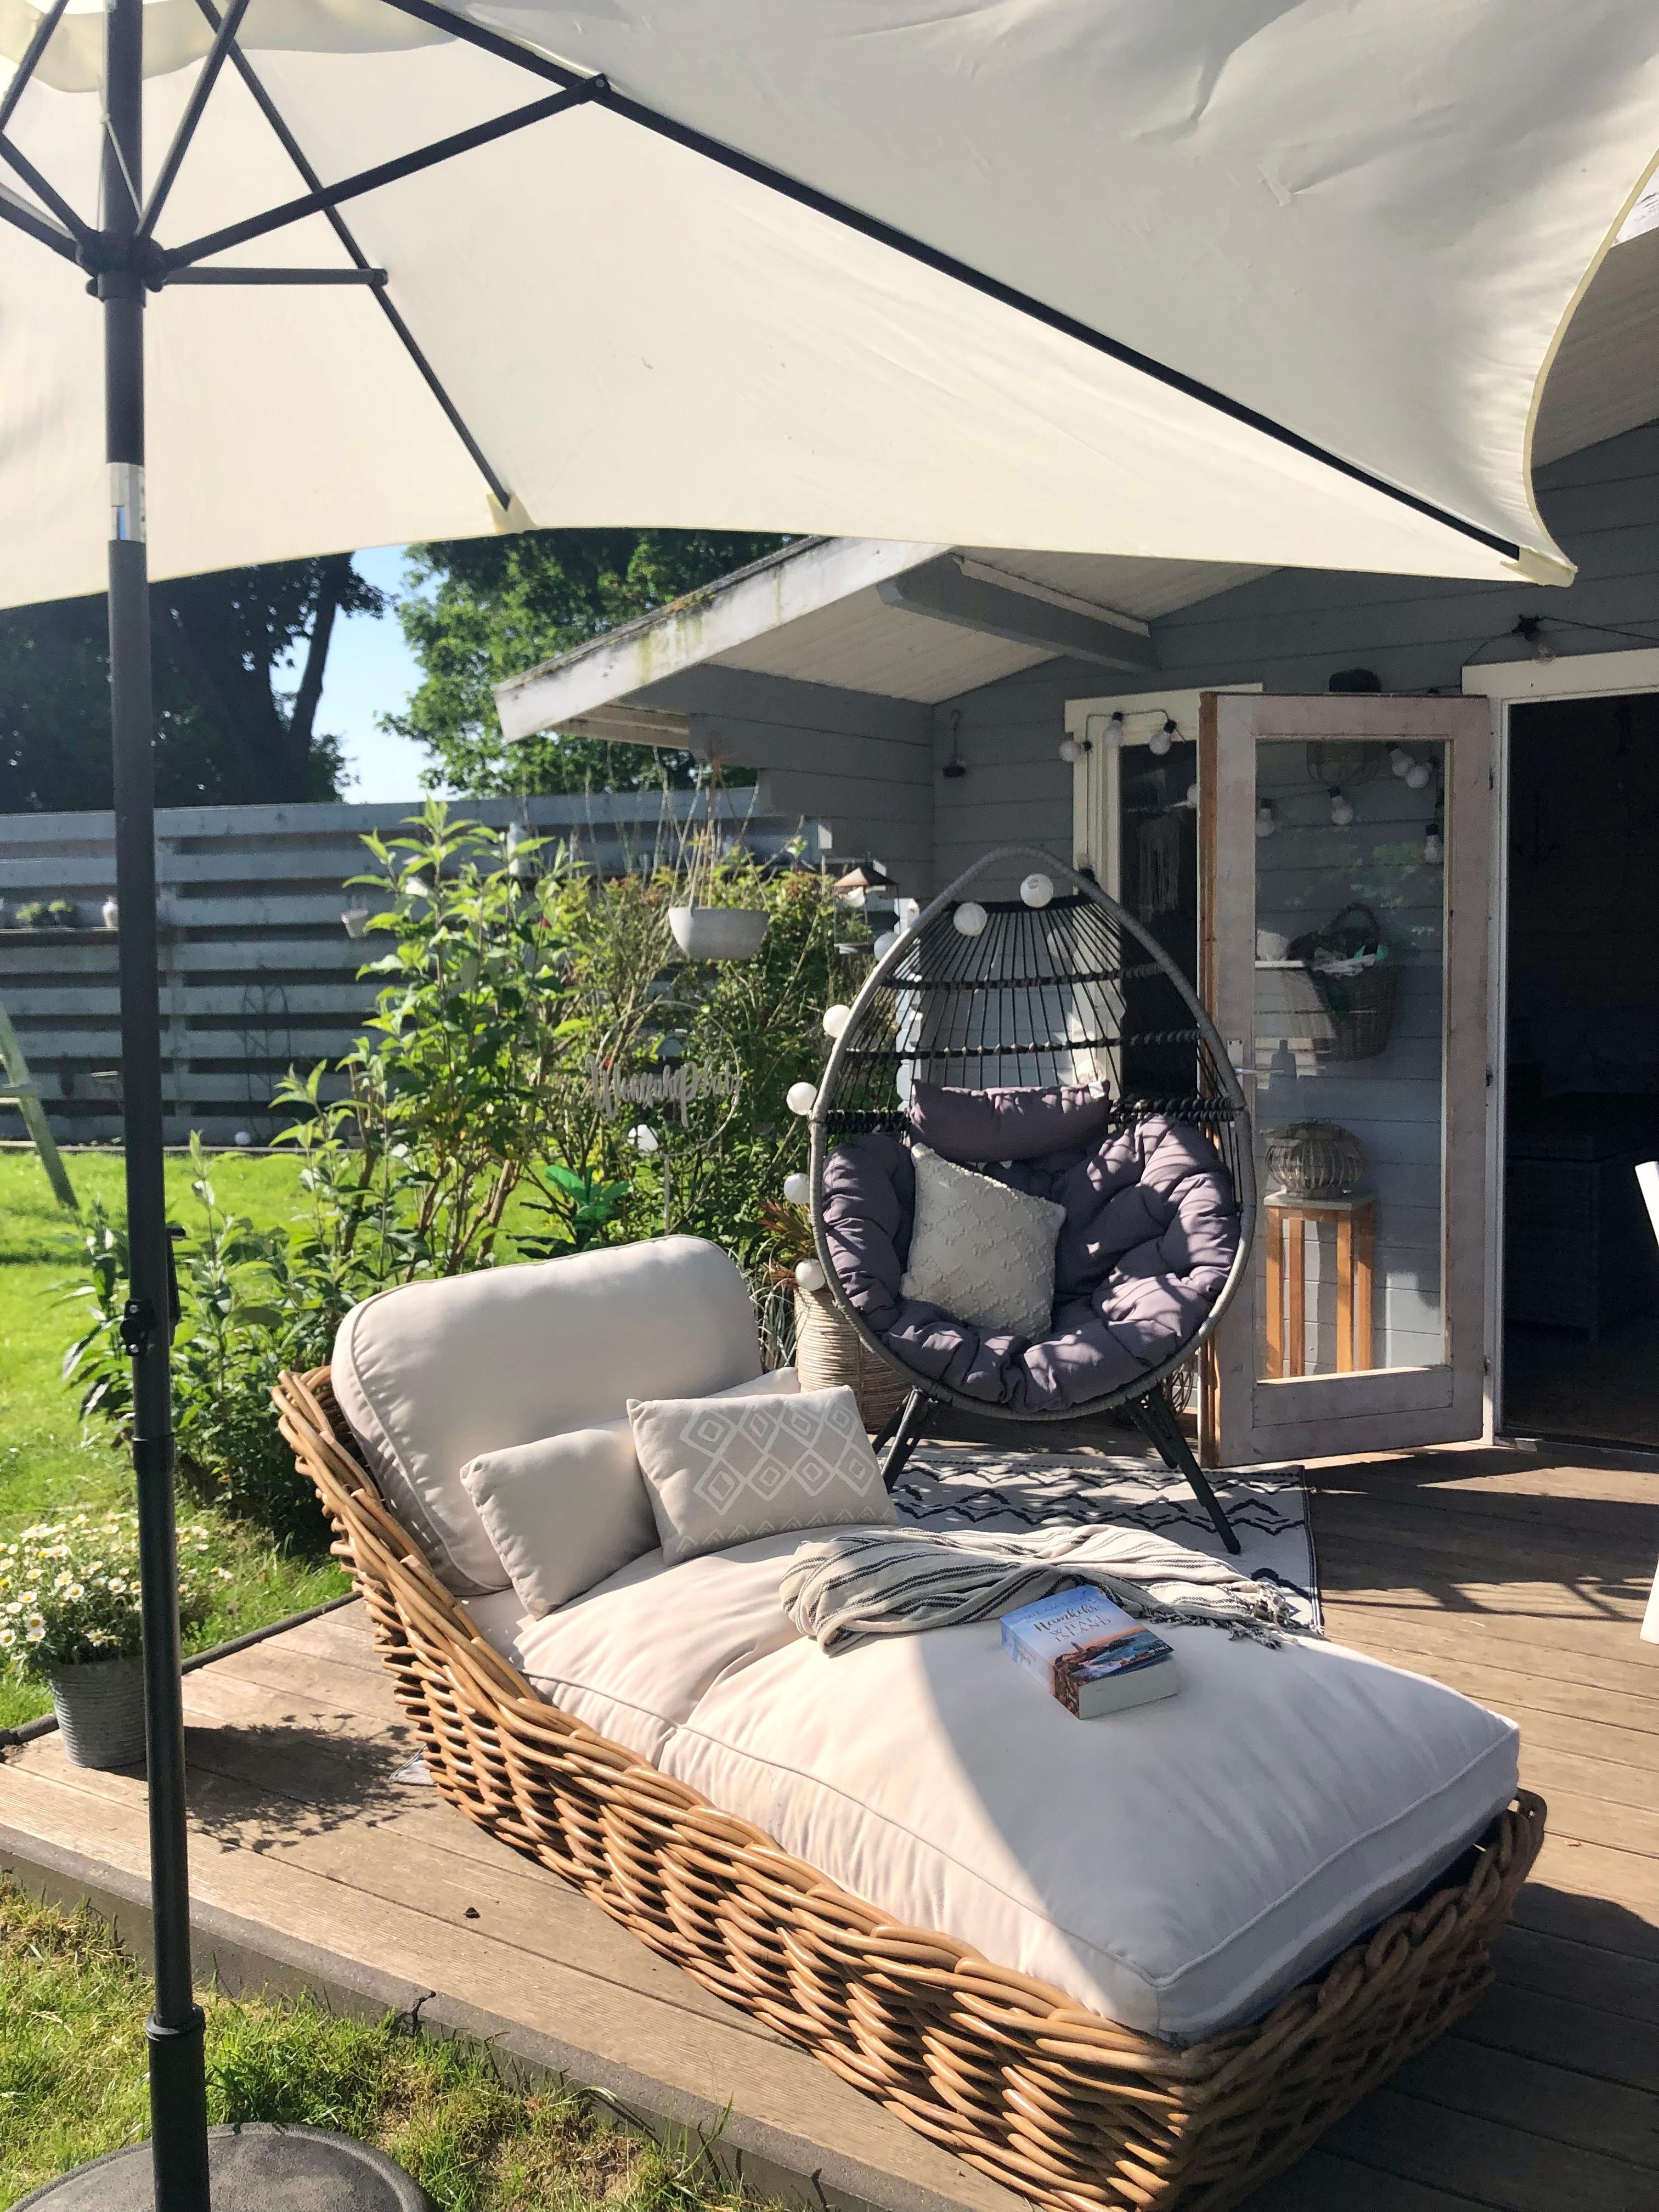 Stay Cool 🕶
#terrasse #terrassenideen #outdoor #couchstyle #couchmagazin #lieblingsplatz